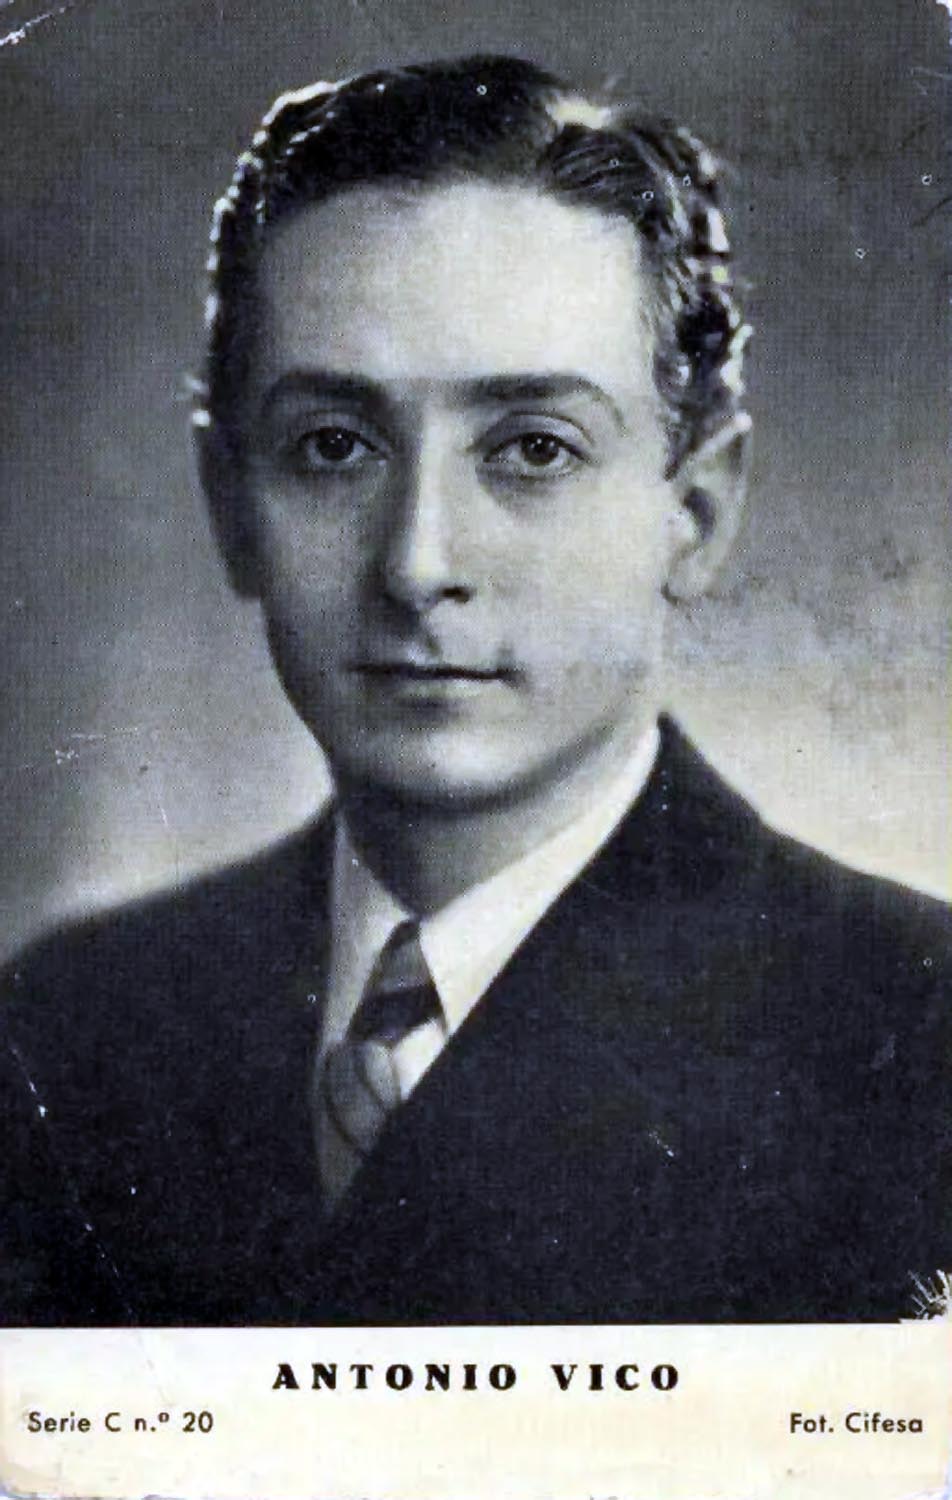 Antonio Vico